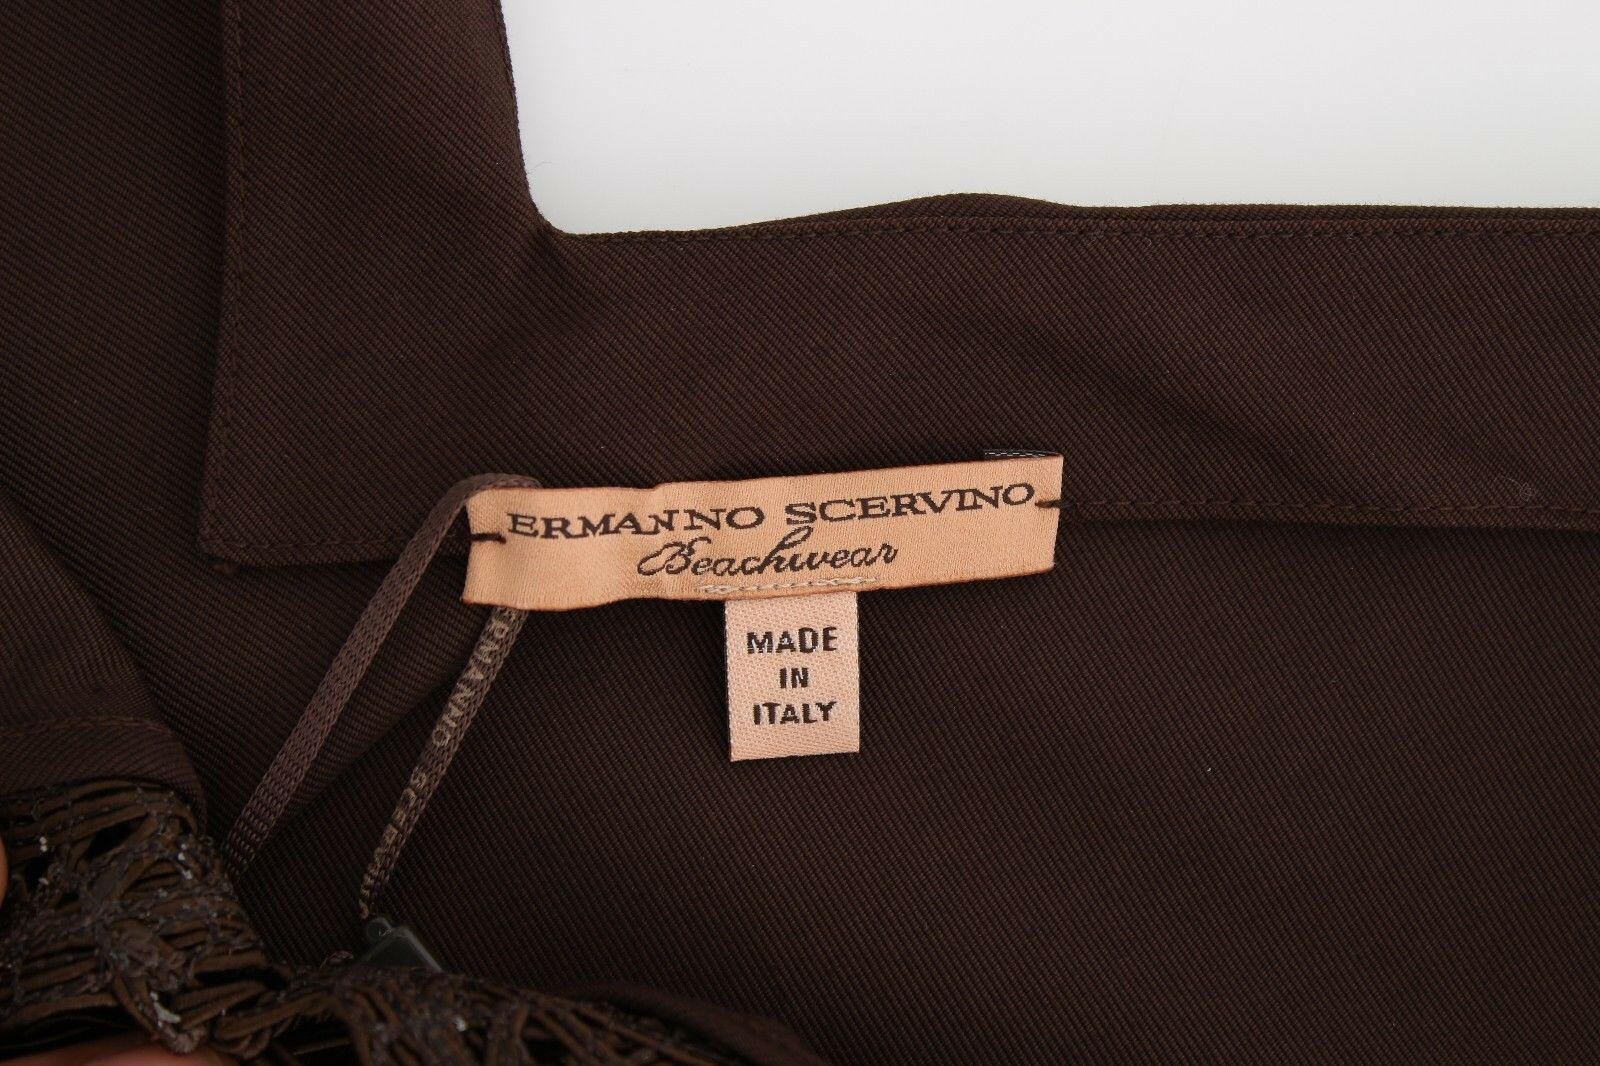 Ermanno Scervino Beachwear Brown Cotton Stretch Tunic Dress - GENUINE AUTHENTIC BRAND LLC  